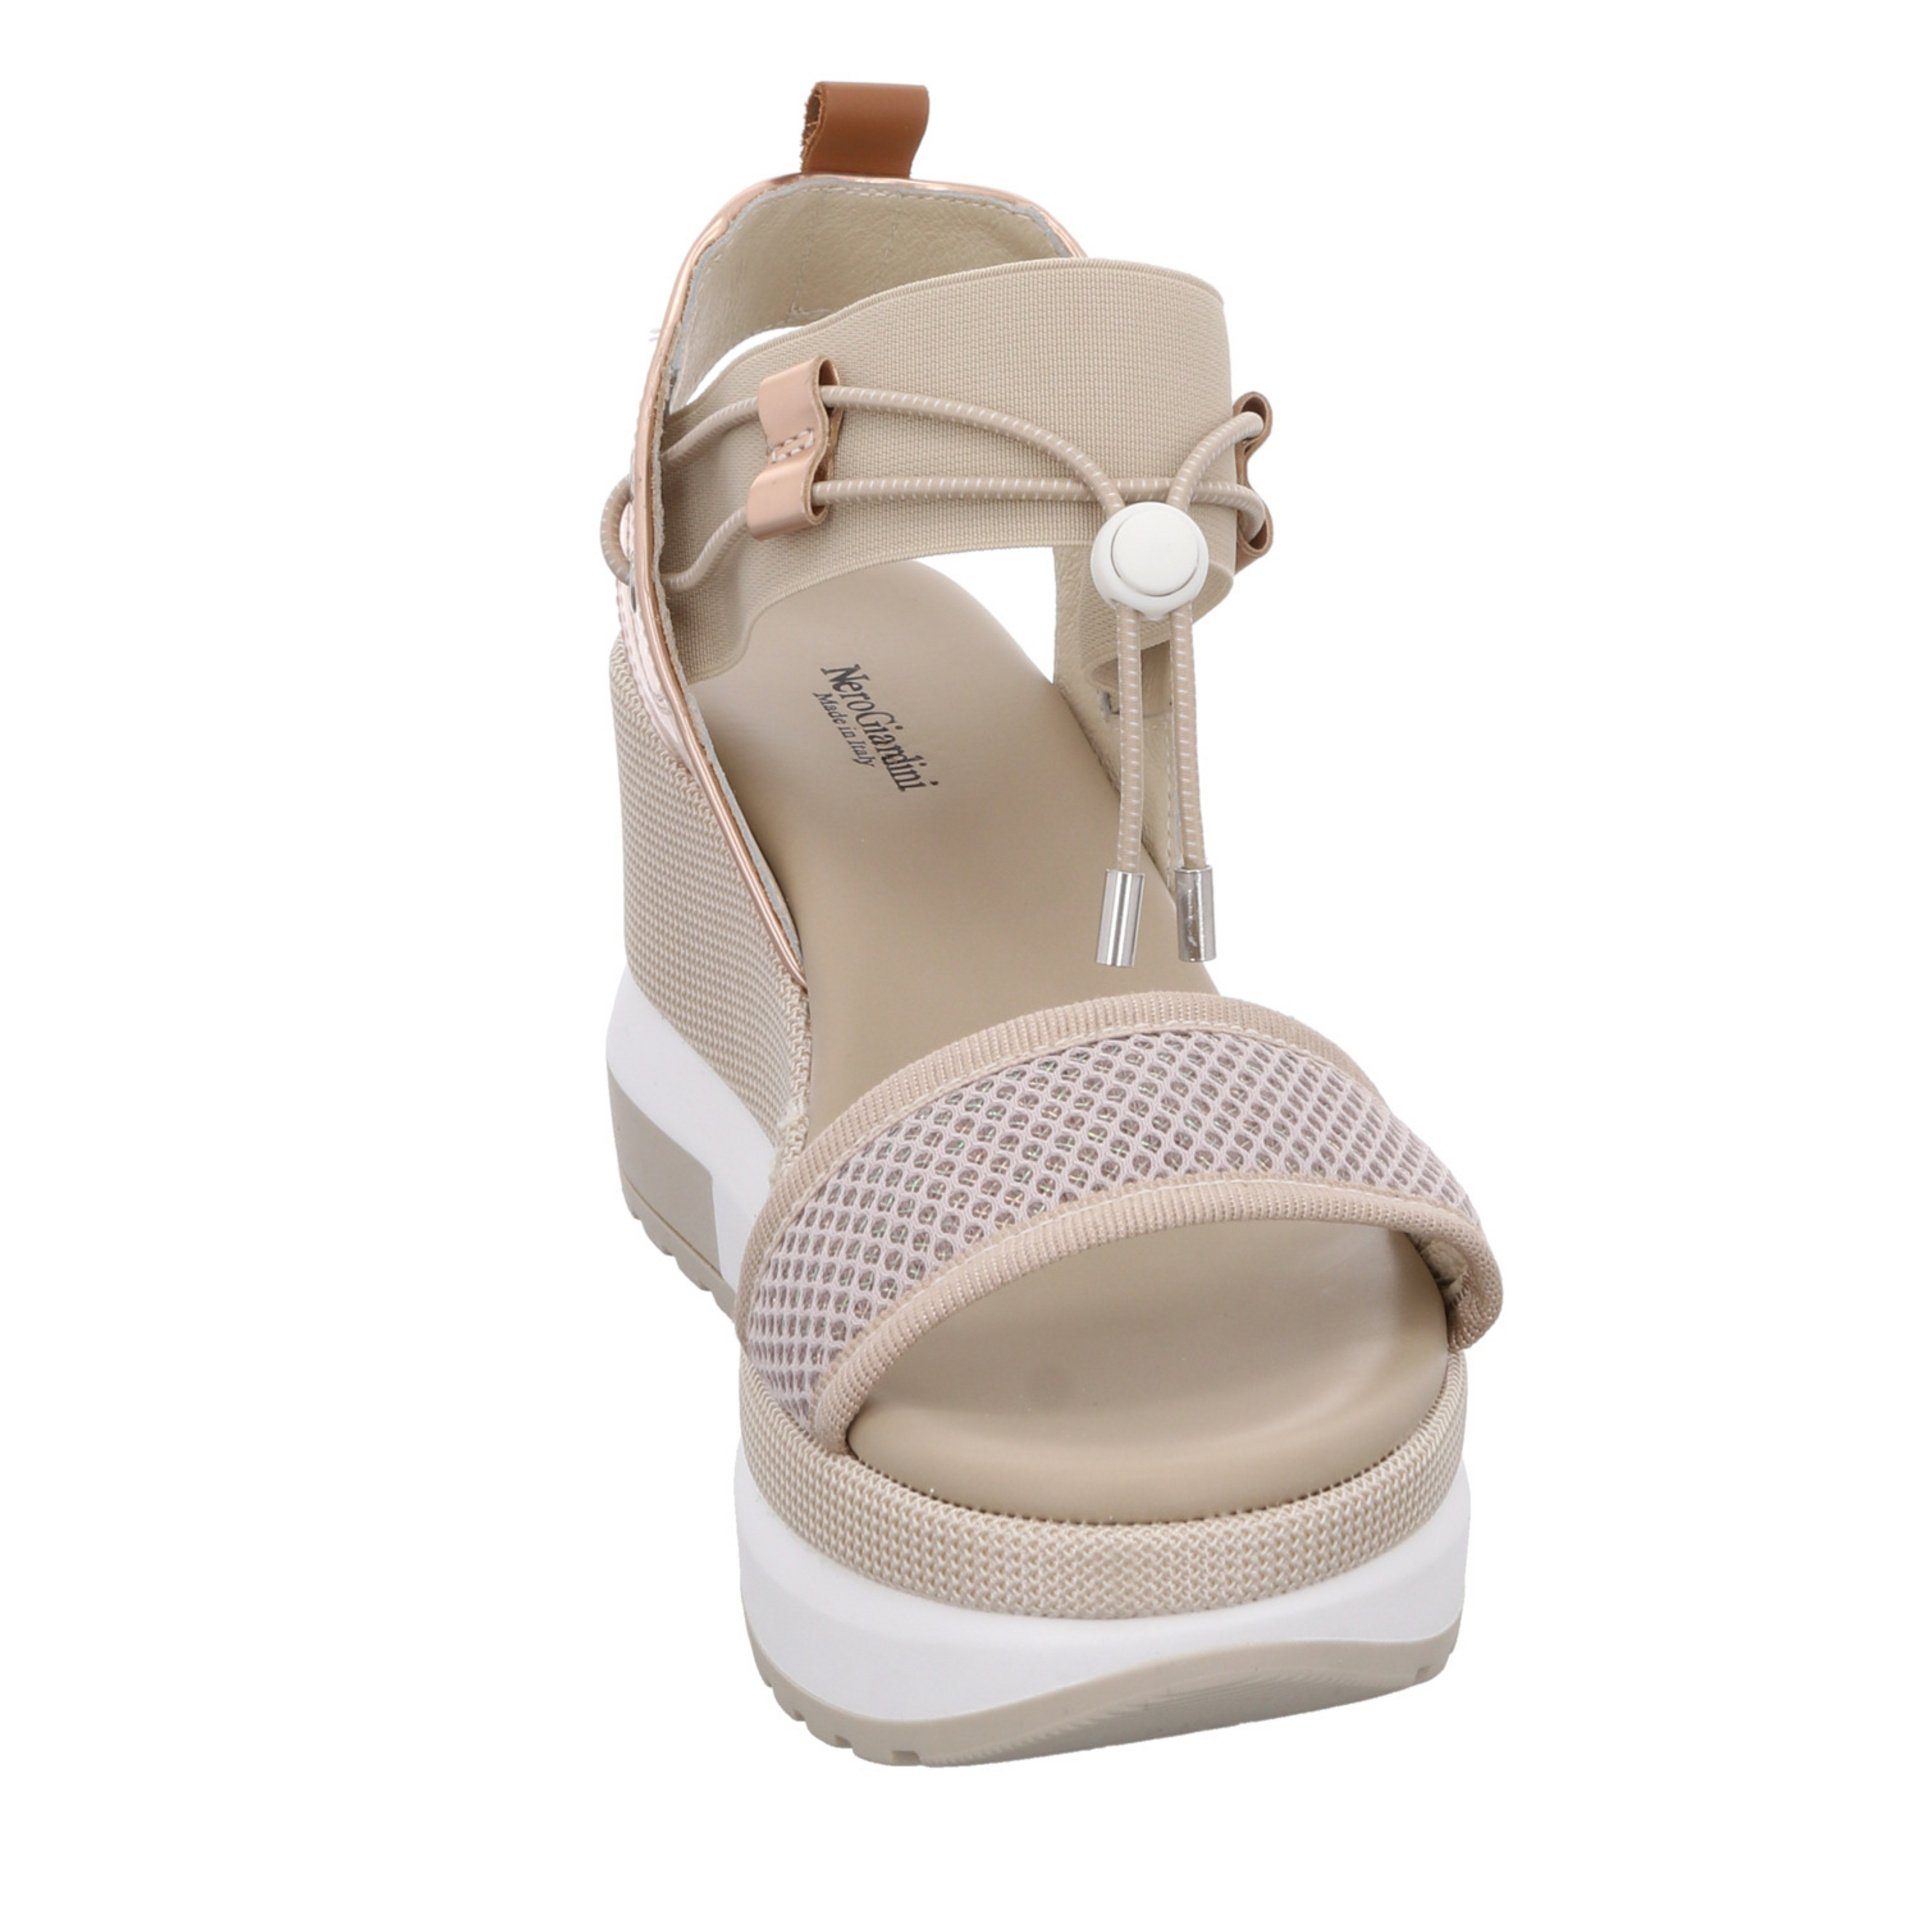 Nero Giardini Damen Sandalen Leder-/Textilkombination Keilsandalette Fußbett Freizeit Bequem Sandalette